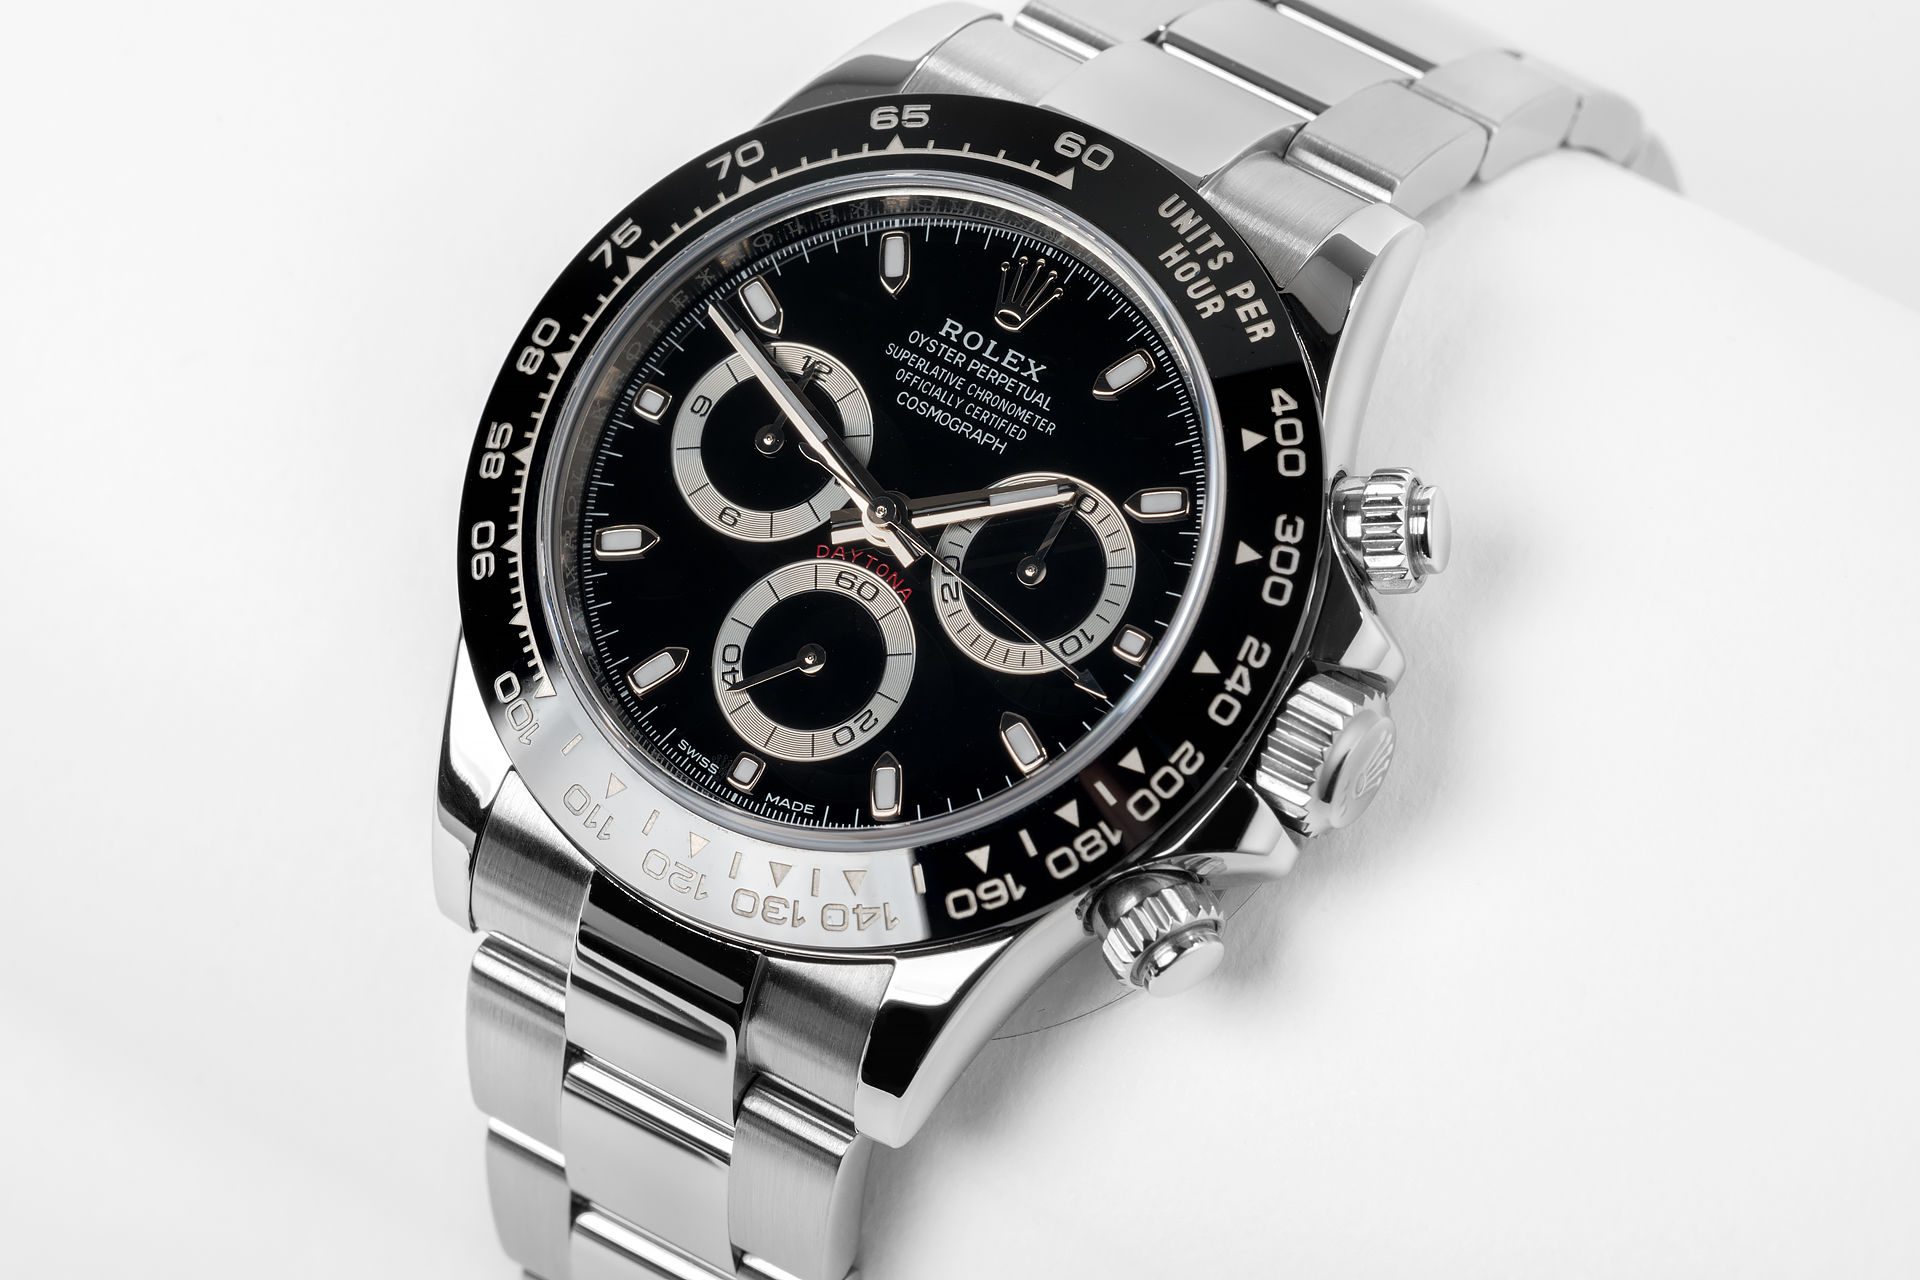 ref 116500LN | '5 Year Rolex Warranty' | Rolex Cosmograph Daytona